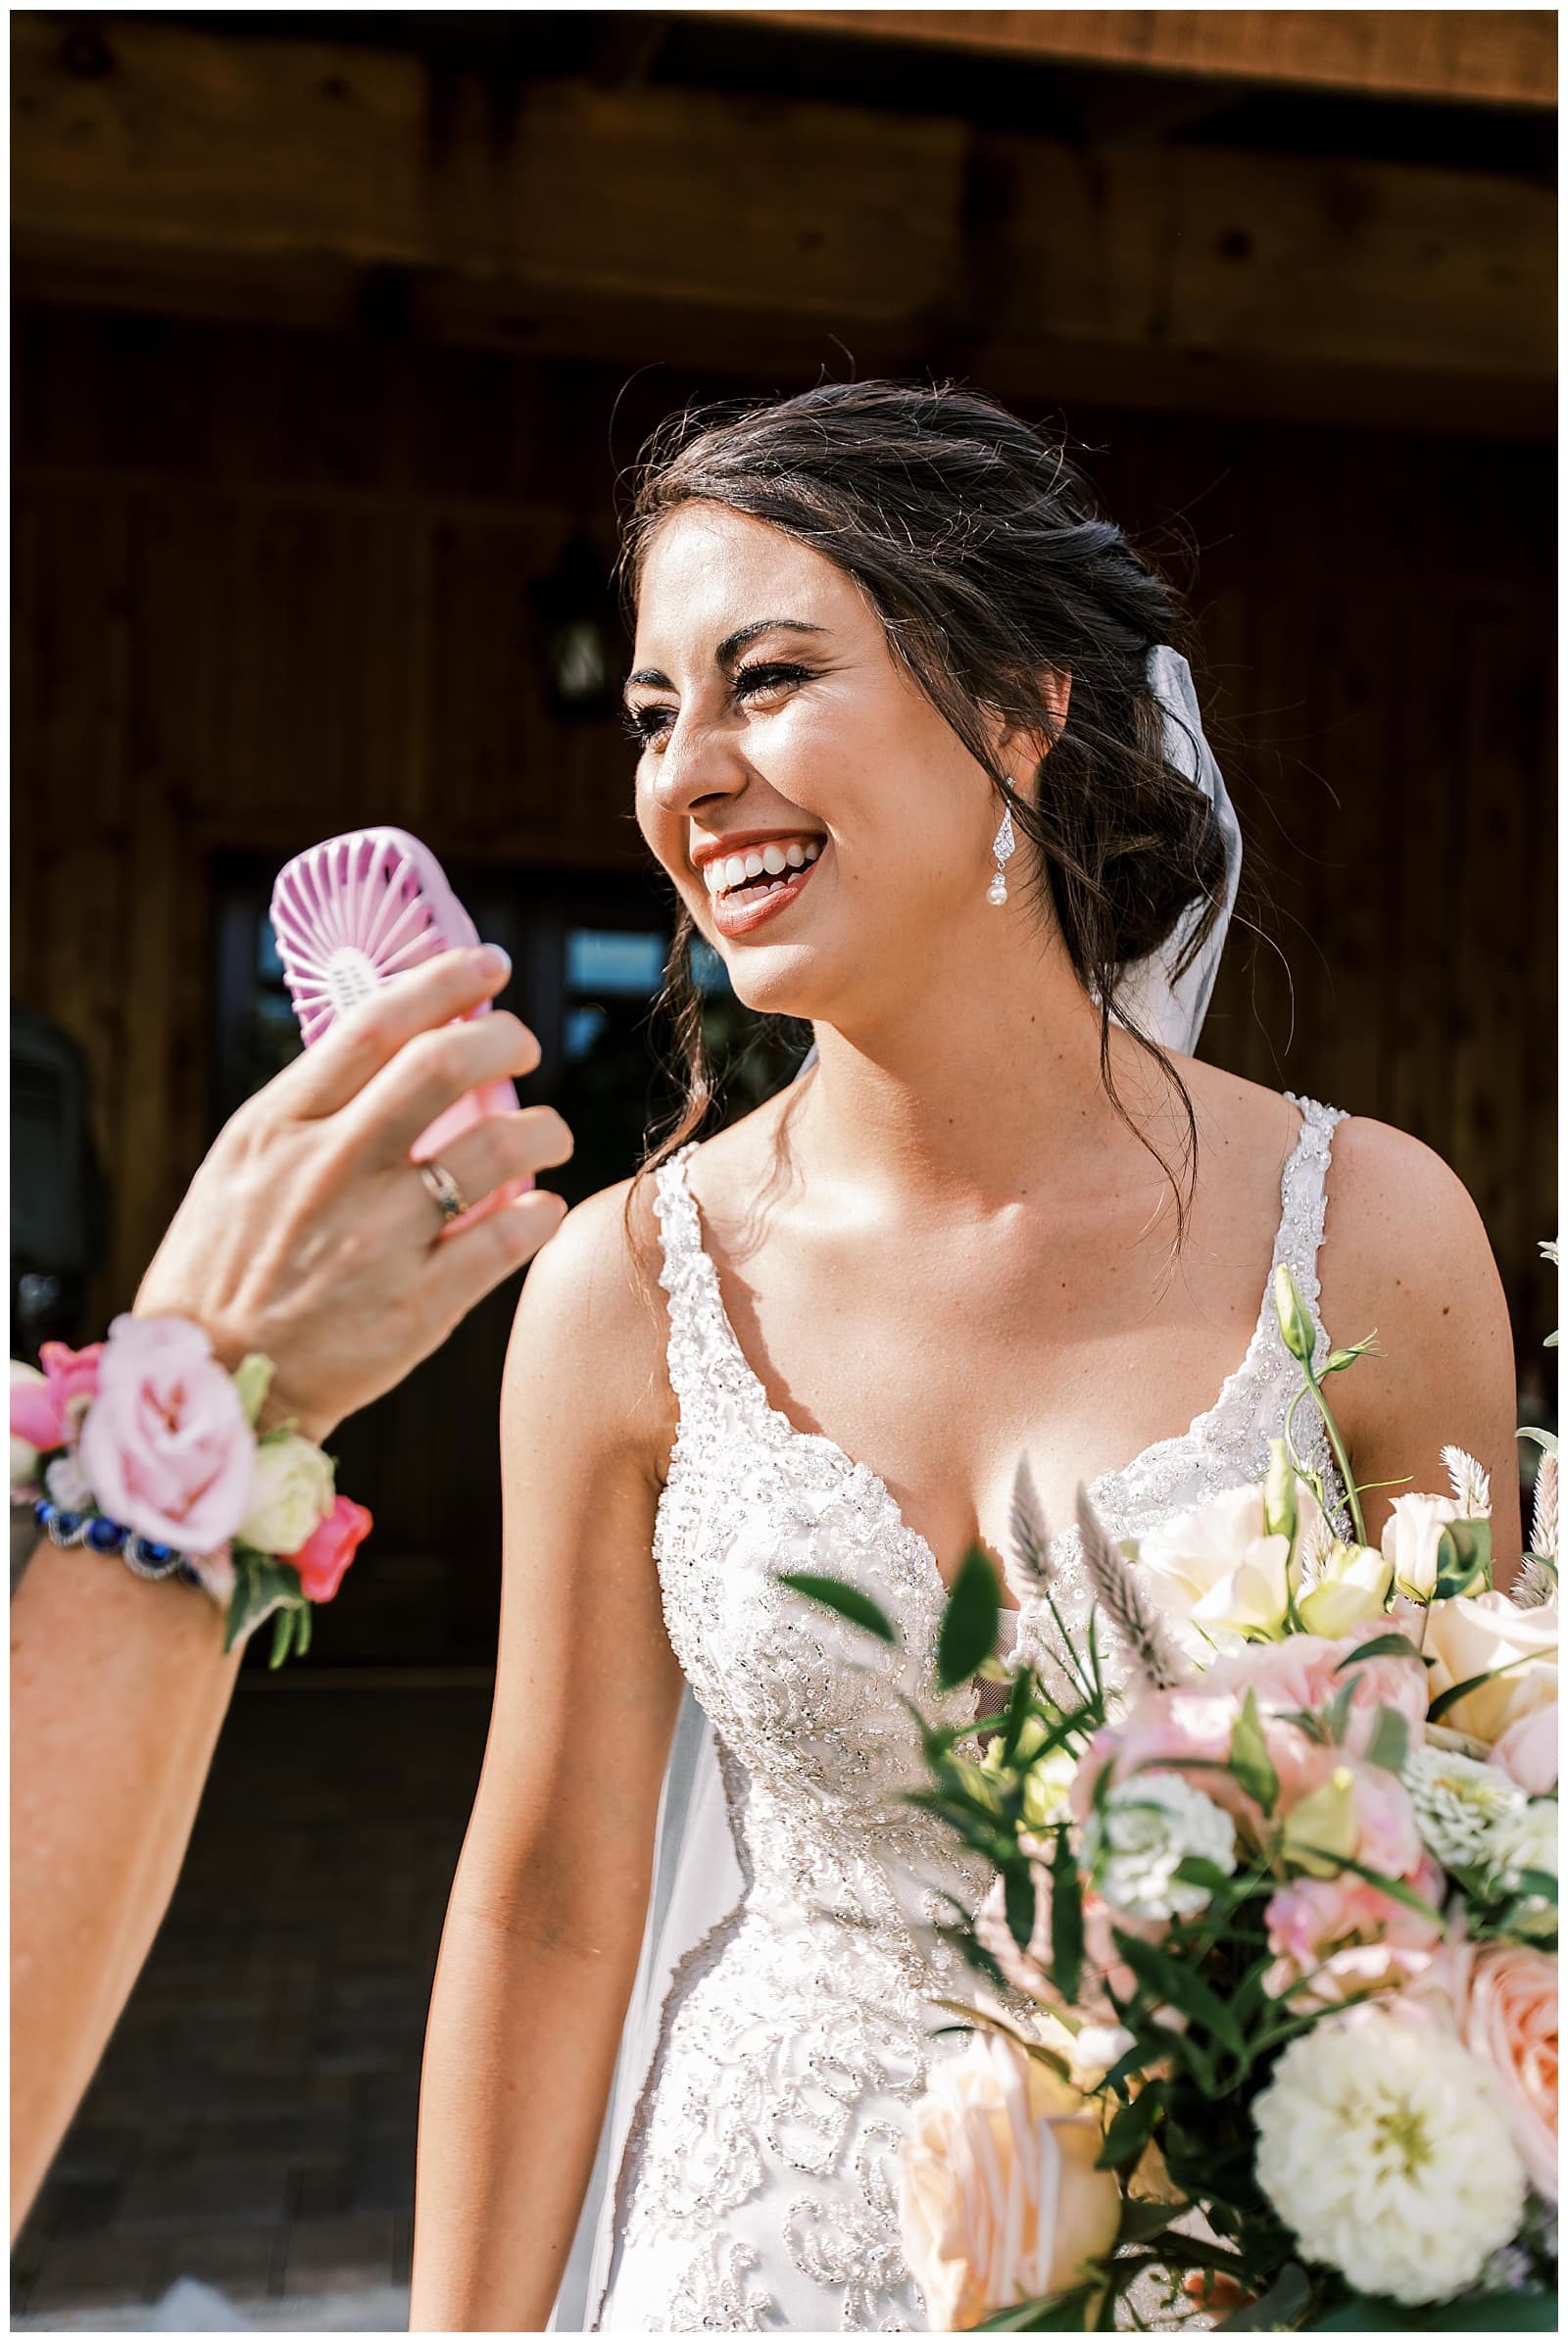 Danielle-Defayette-Photography-Middle-Fork-Barn-Wedding-VA-2020_0033.jpg